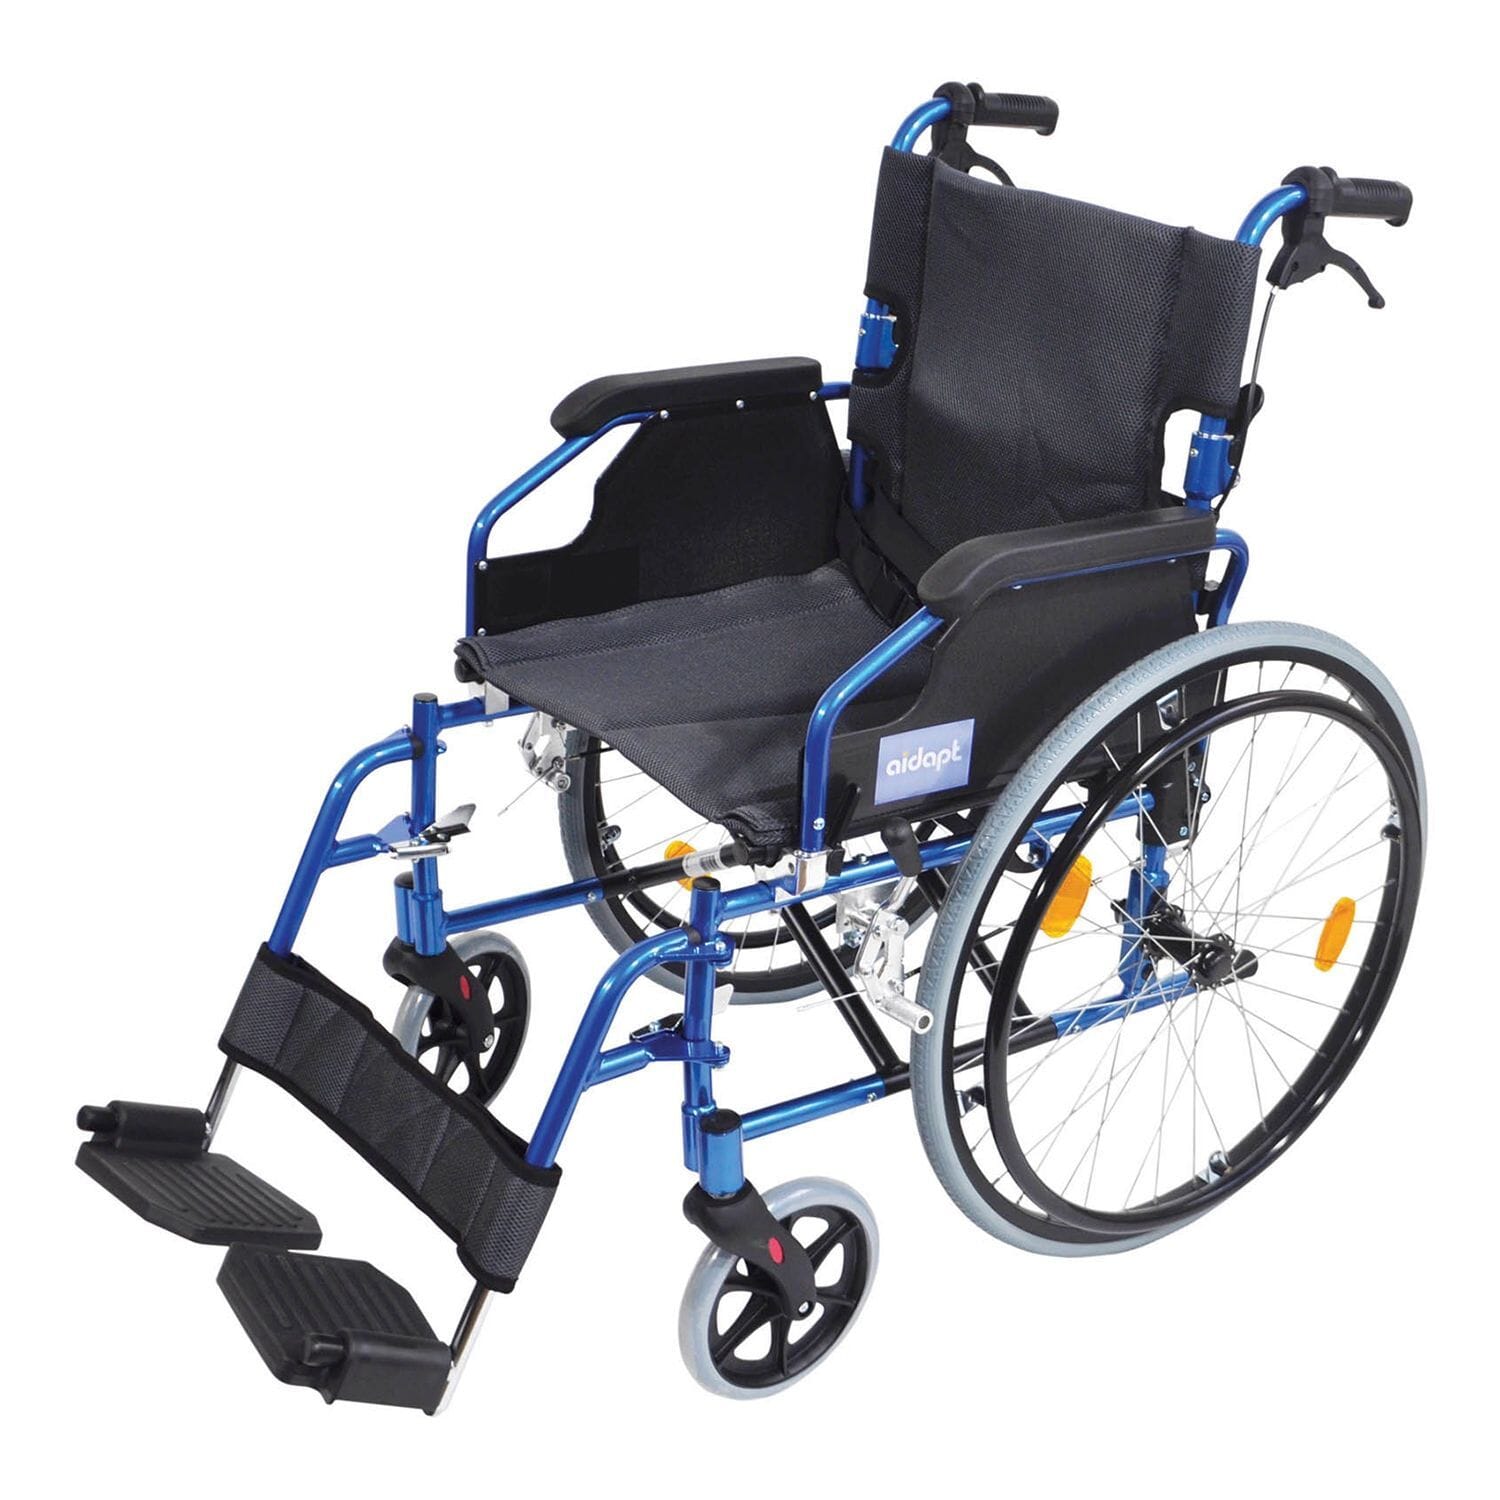 View Aidapt Deluxe Self Propelled Aluminium Wheelchair BLUE information